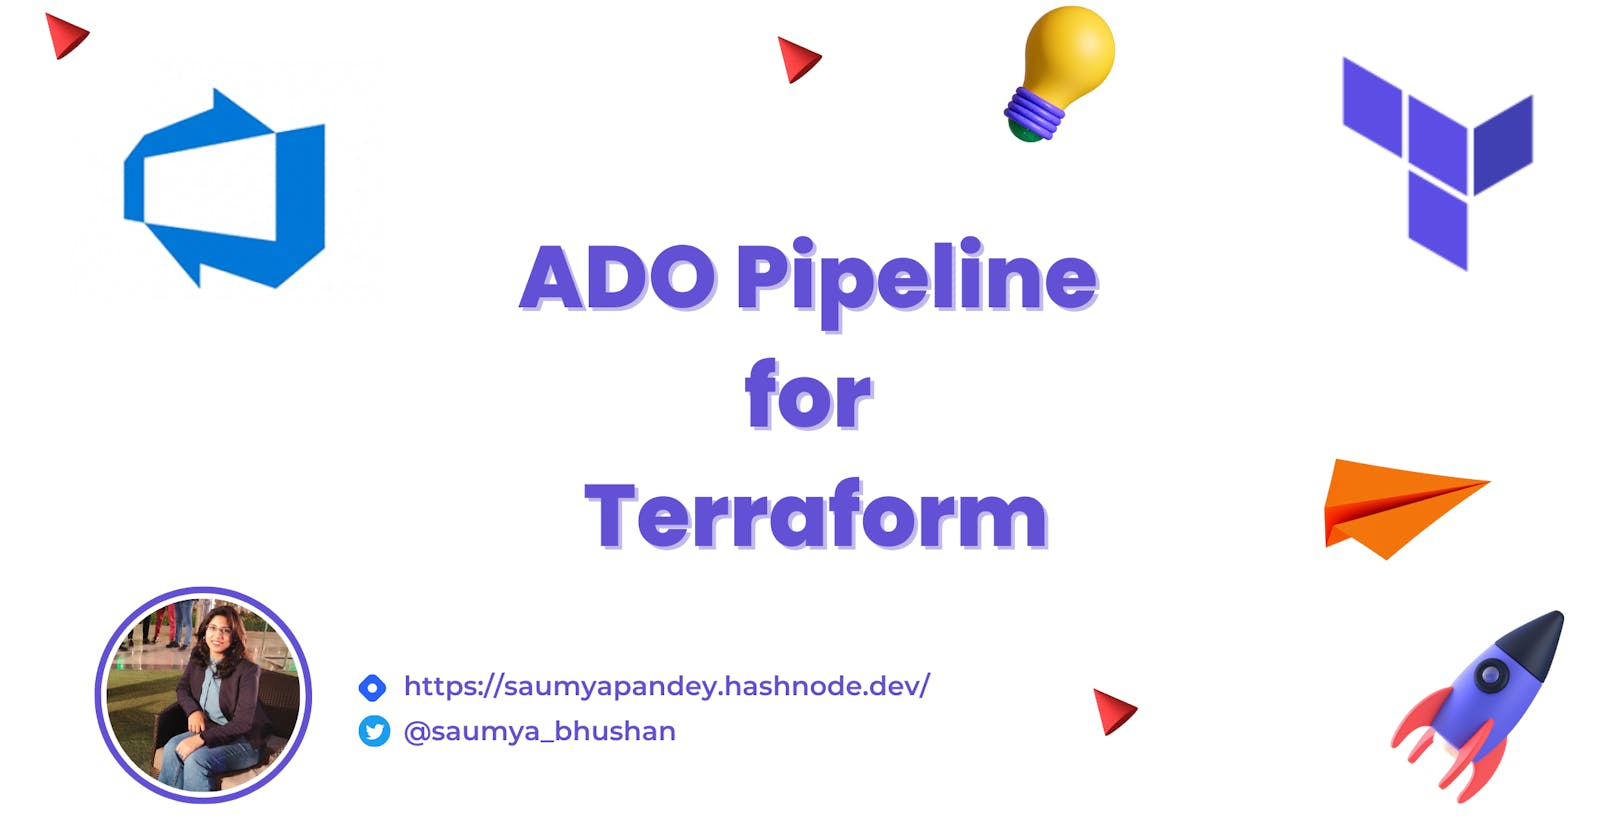 Automating Terraform Deployments with Azure DevOps Pipeline